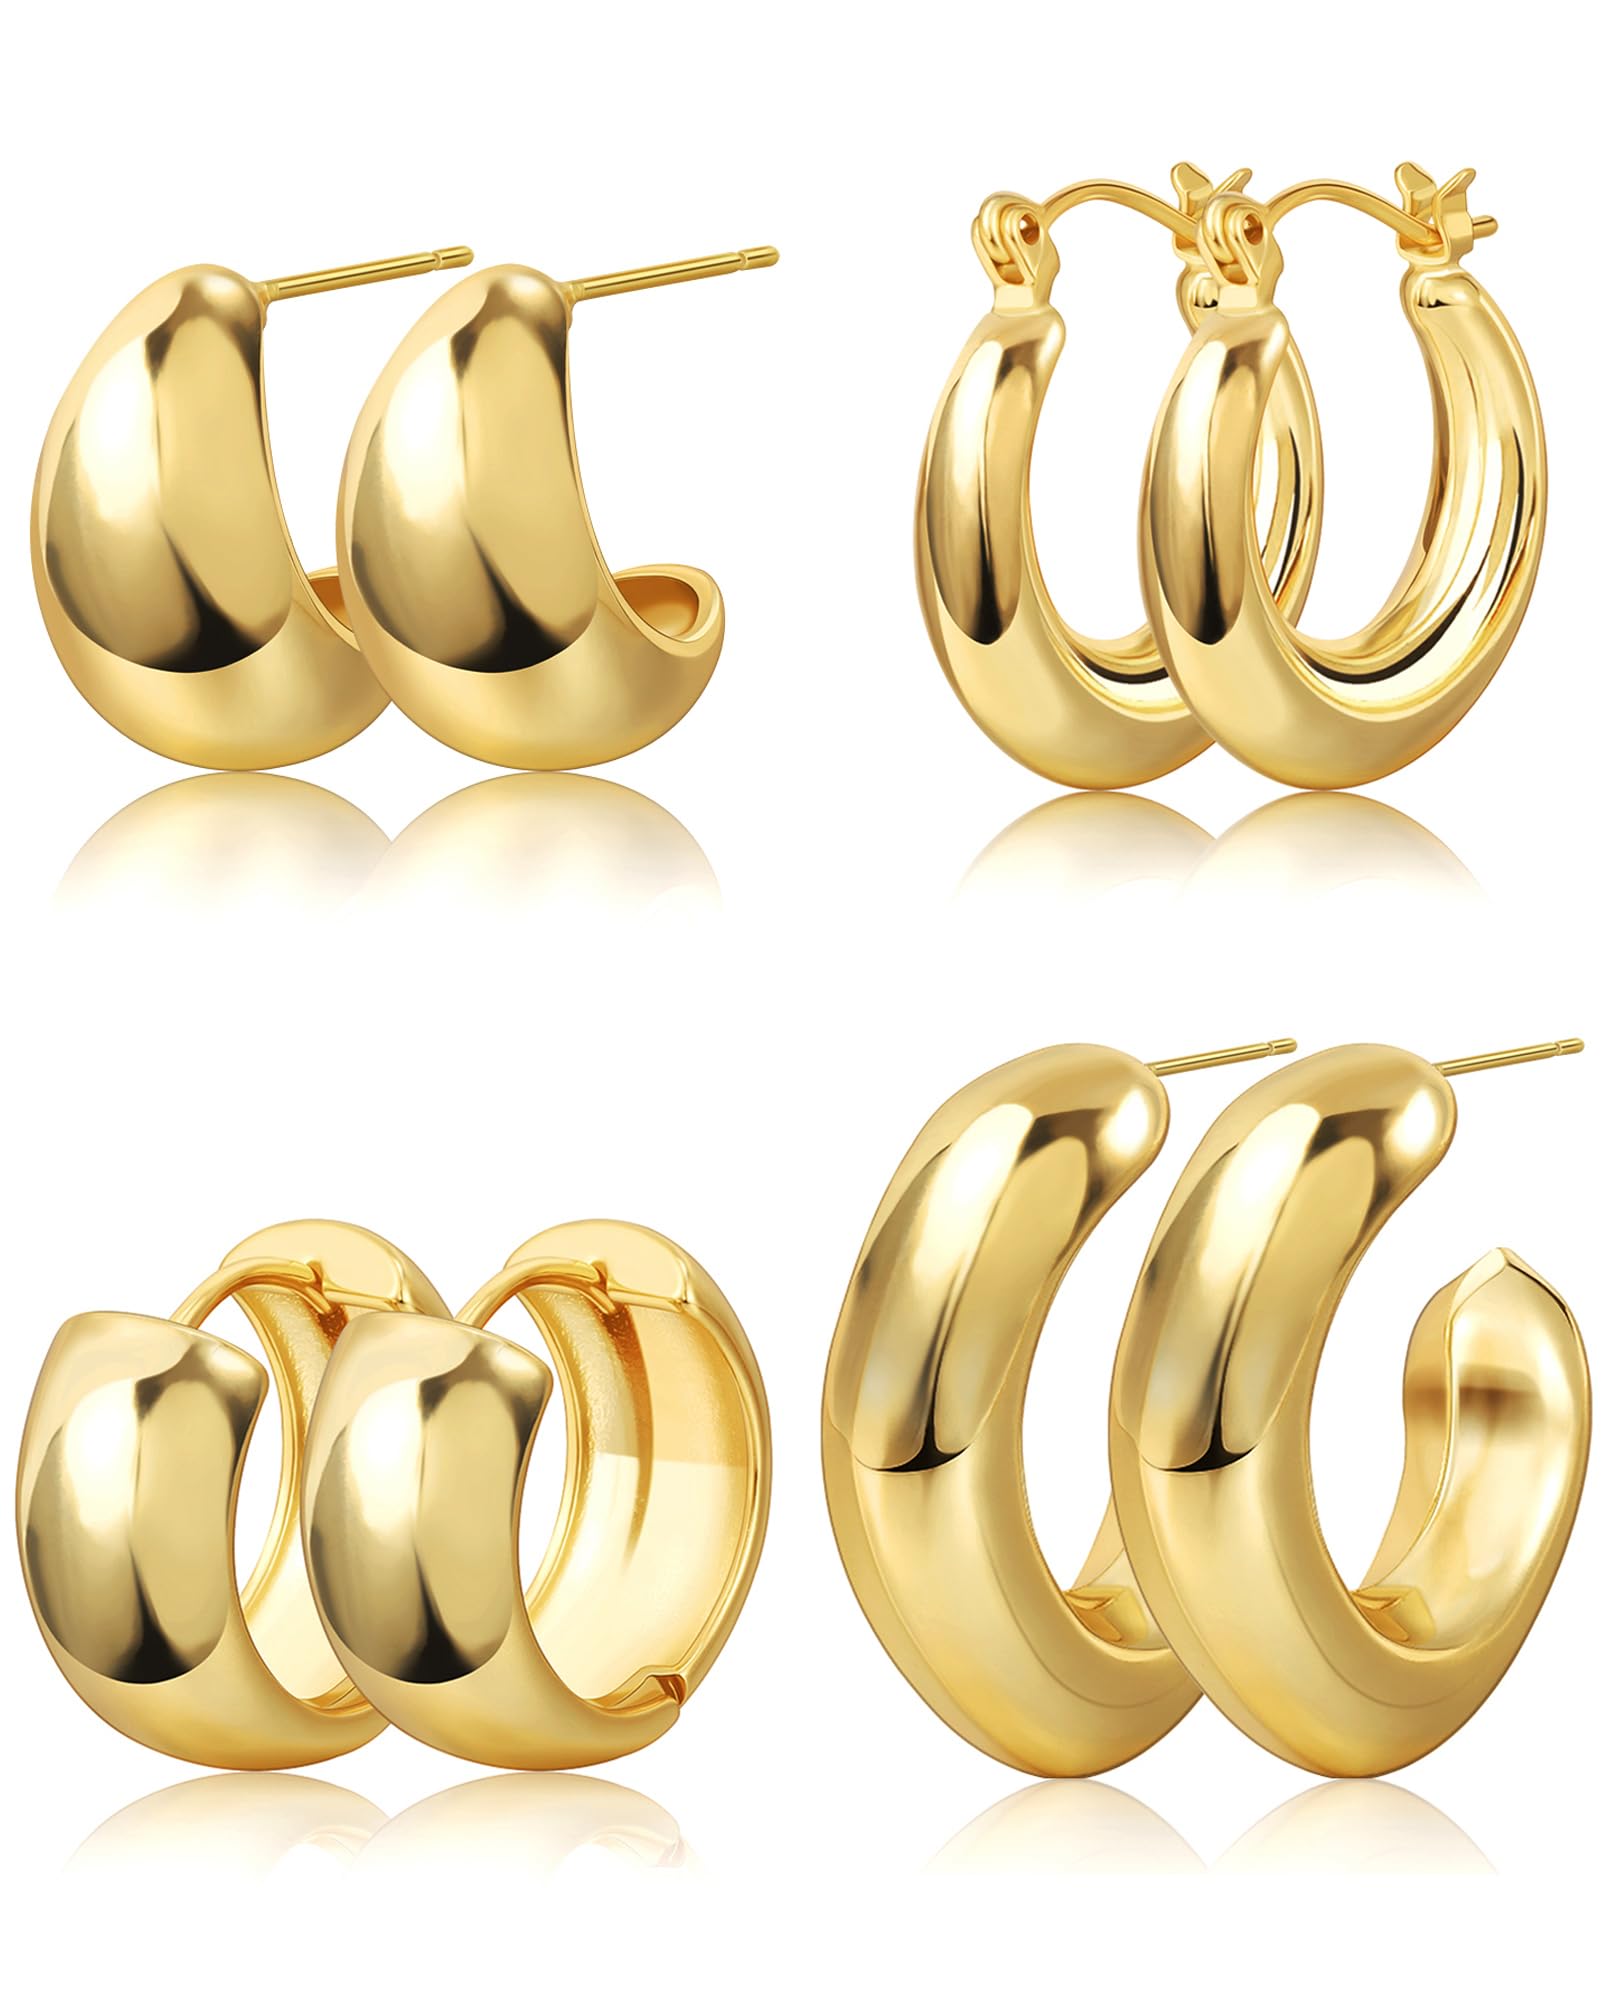 Small Chunky Hoop Earrings Lightweight - 14K Gold Hoop Earrings for Women Thick Gold Earrings Set for Girls Hypoallergenic 925 Sterling Silver for Sensitive Ears